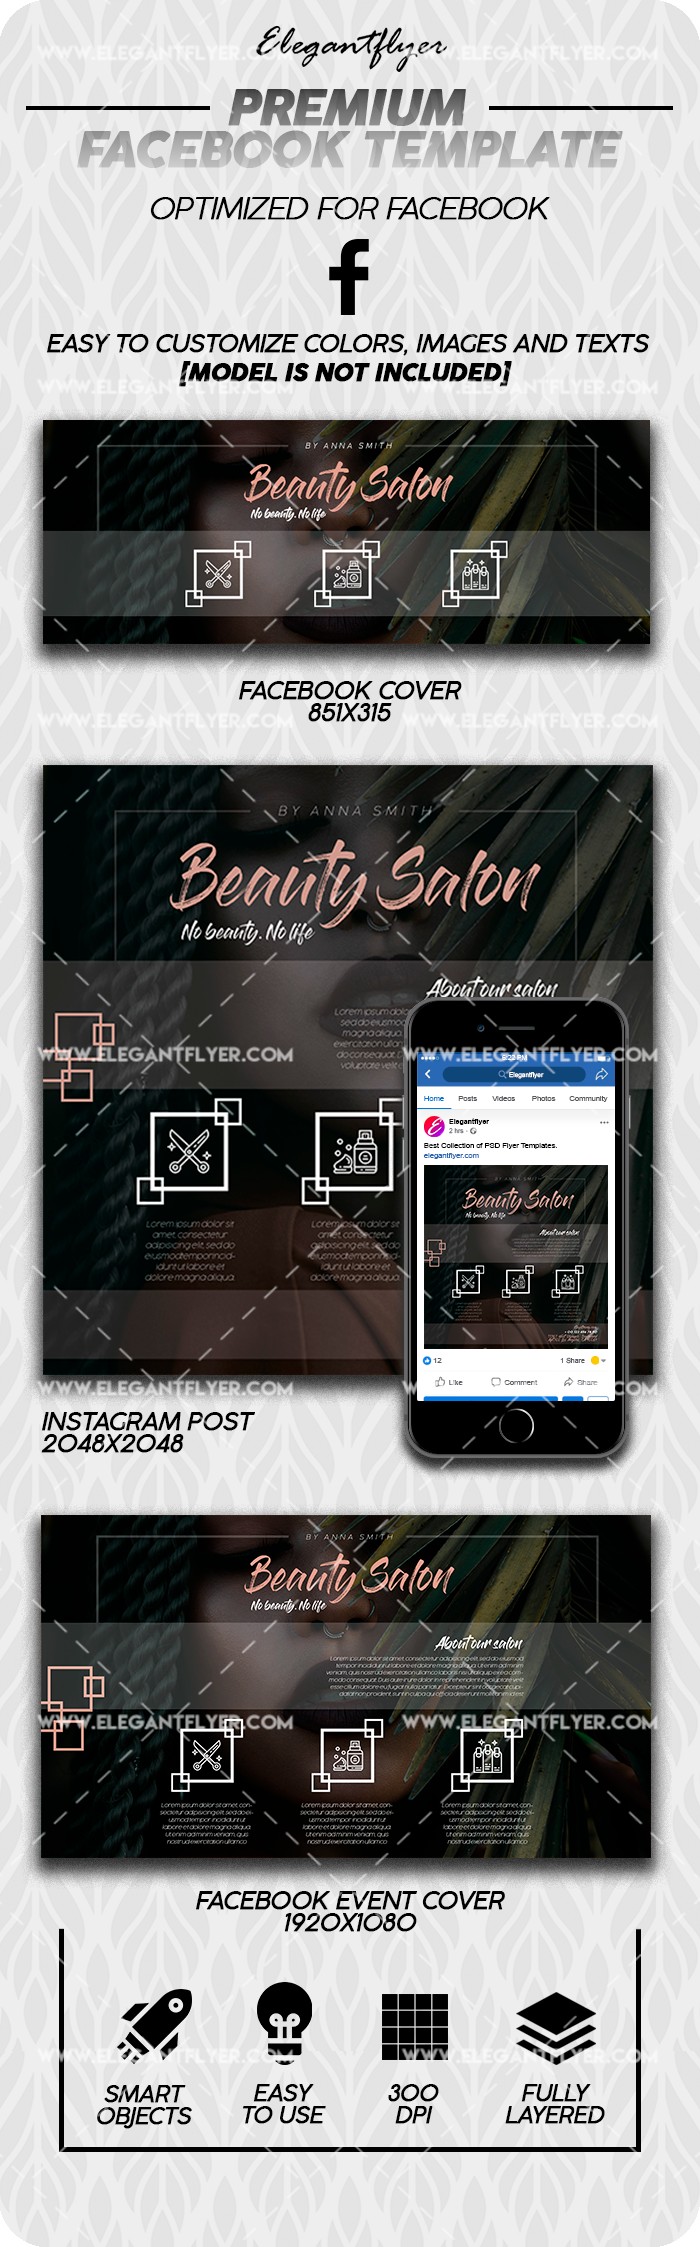 Beauty Salon by ElegantFlyer